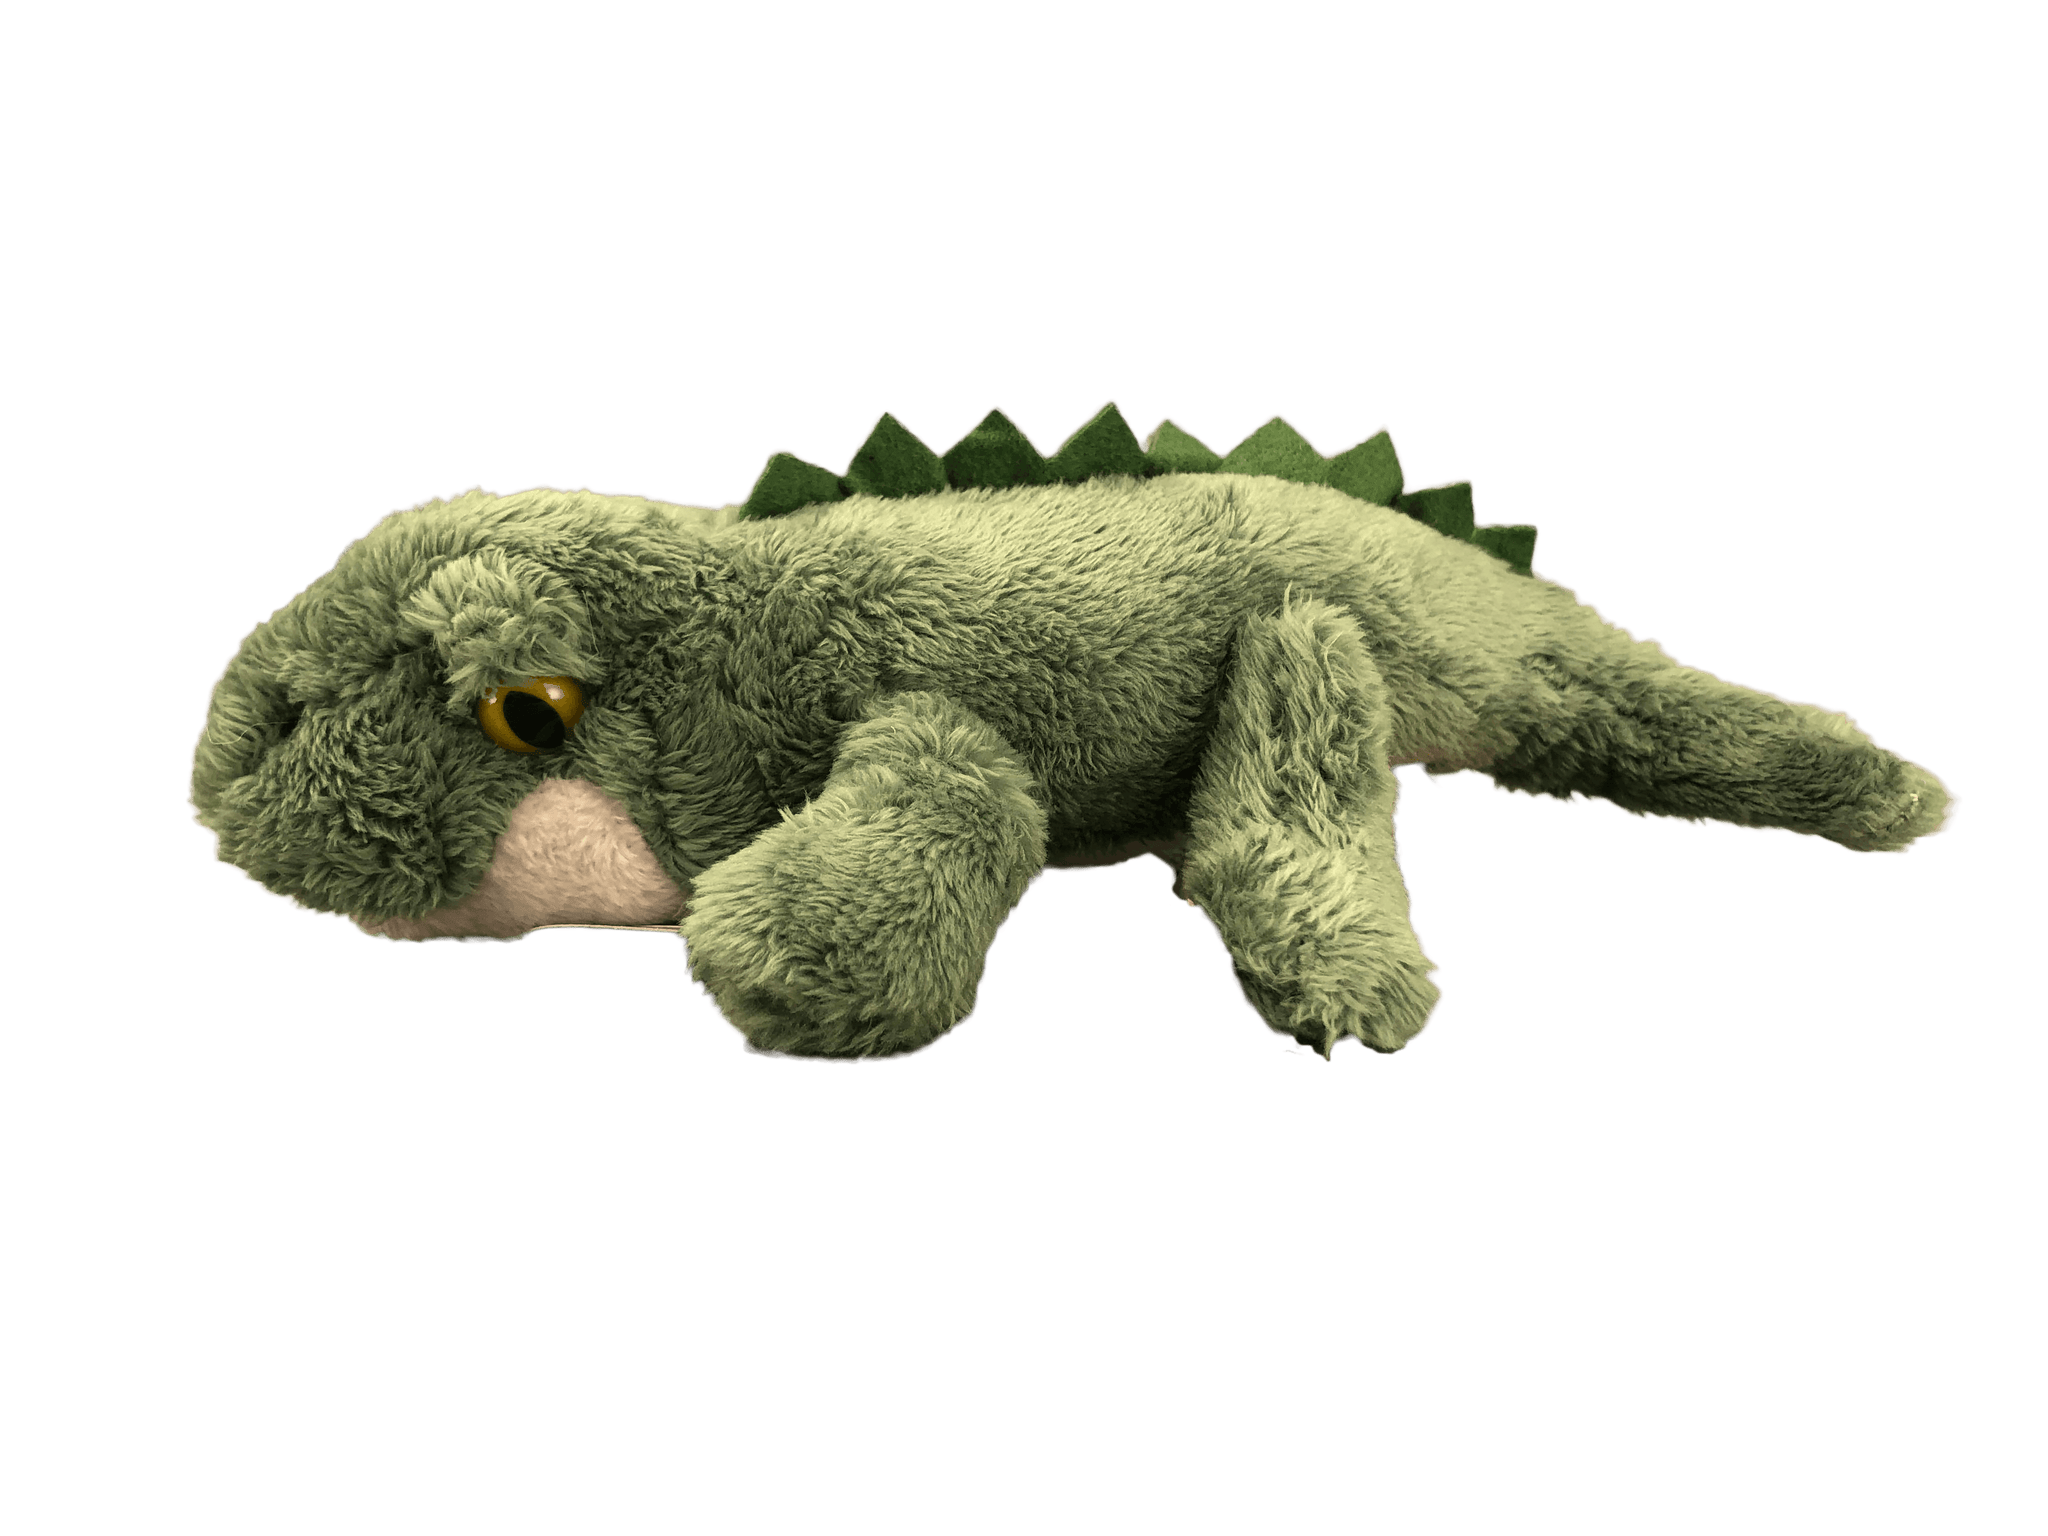 Light green plush alligator toy